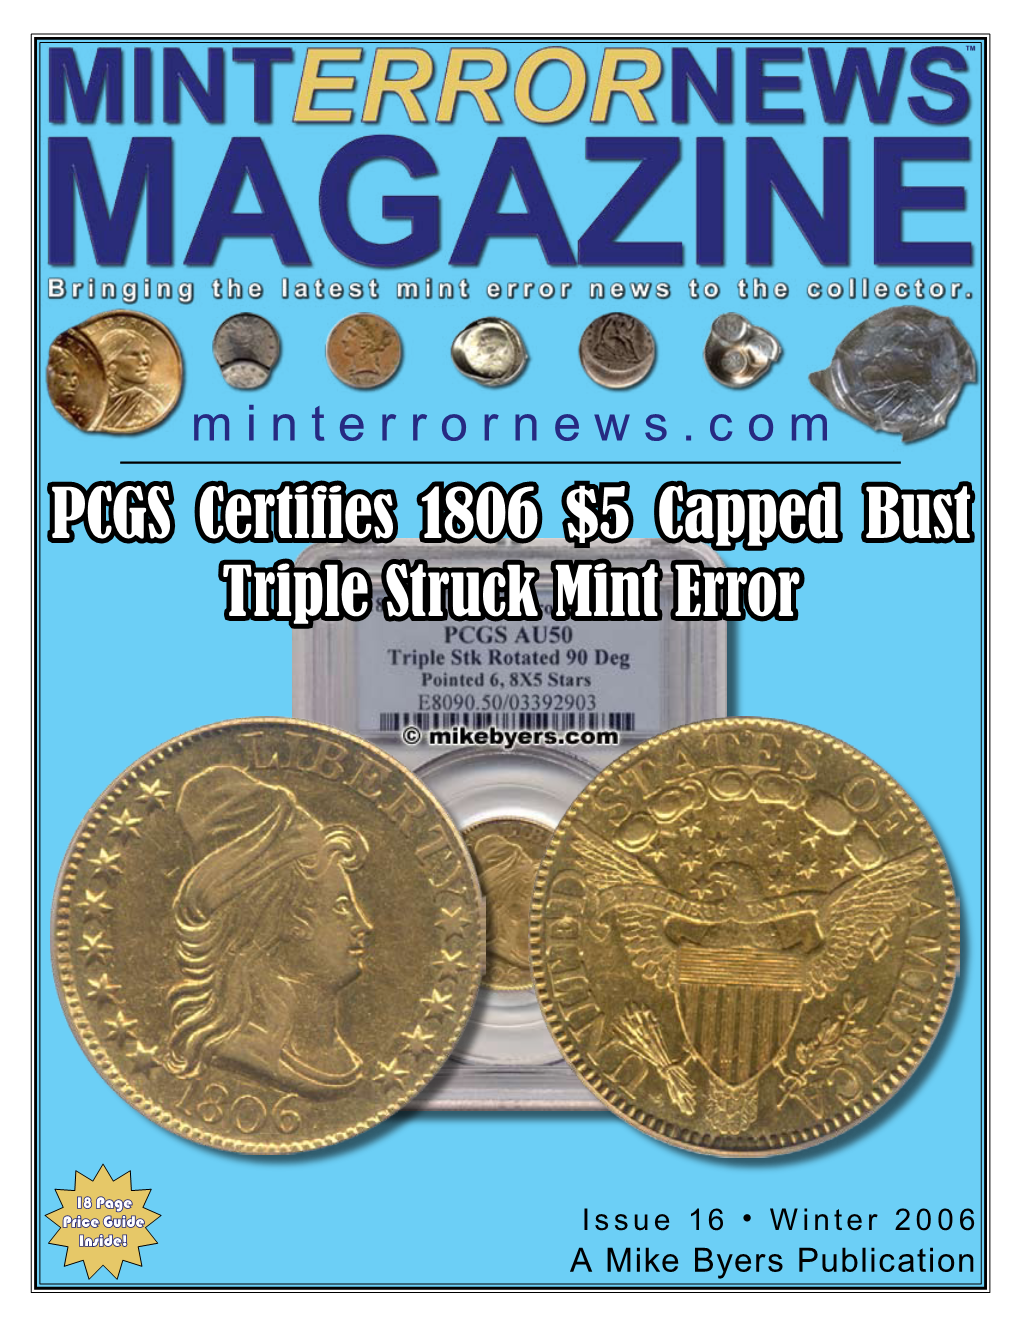 PCGS Certifies 1806 $5 Capped Bust Triple Struck Mint Error